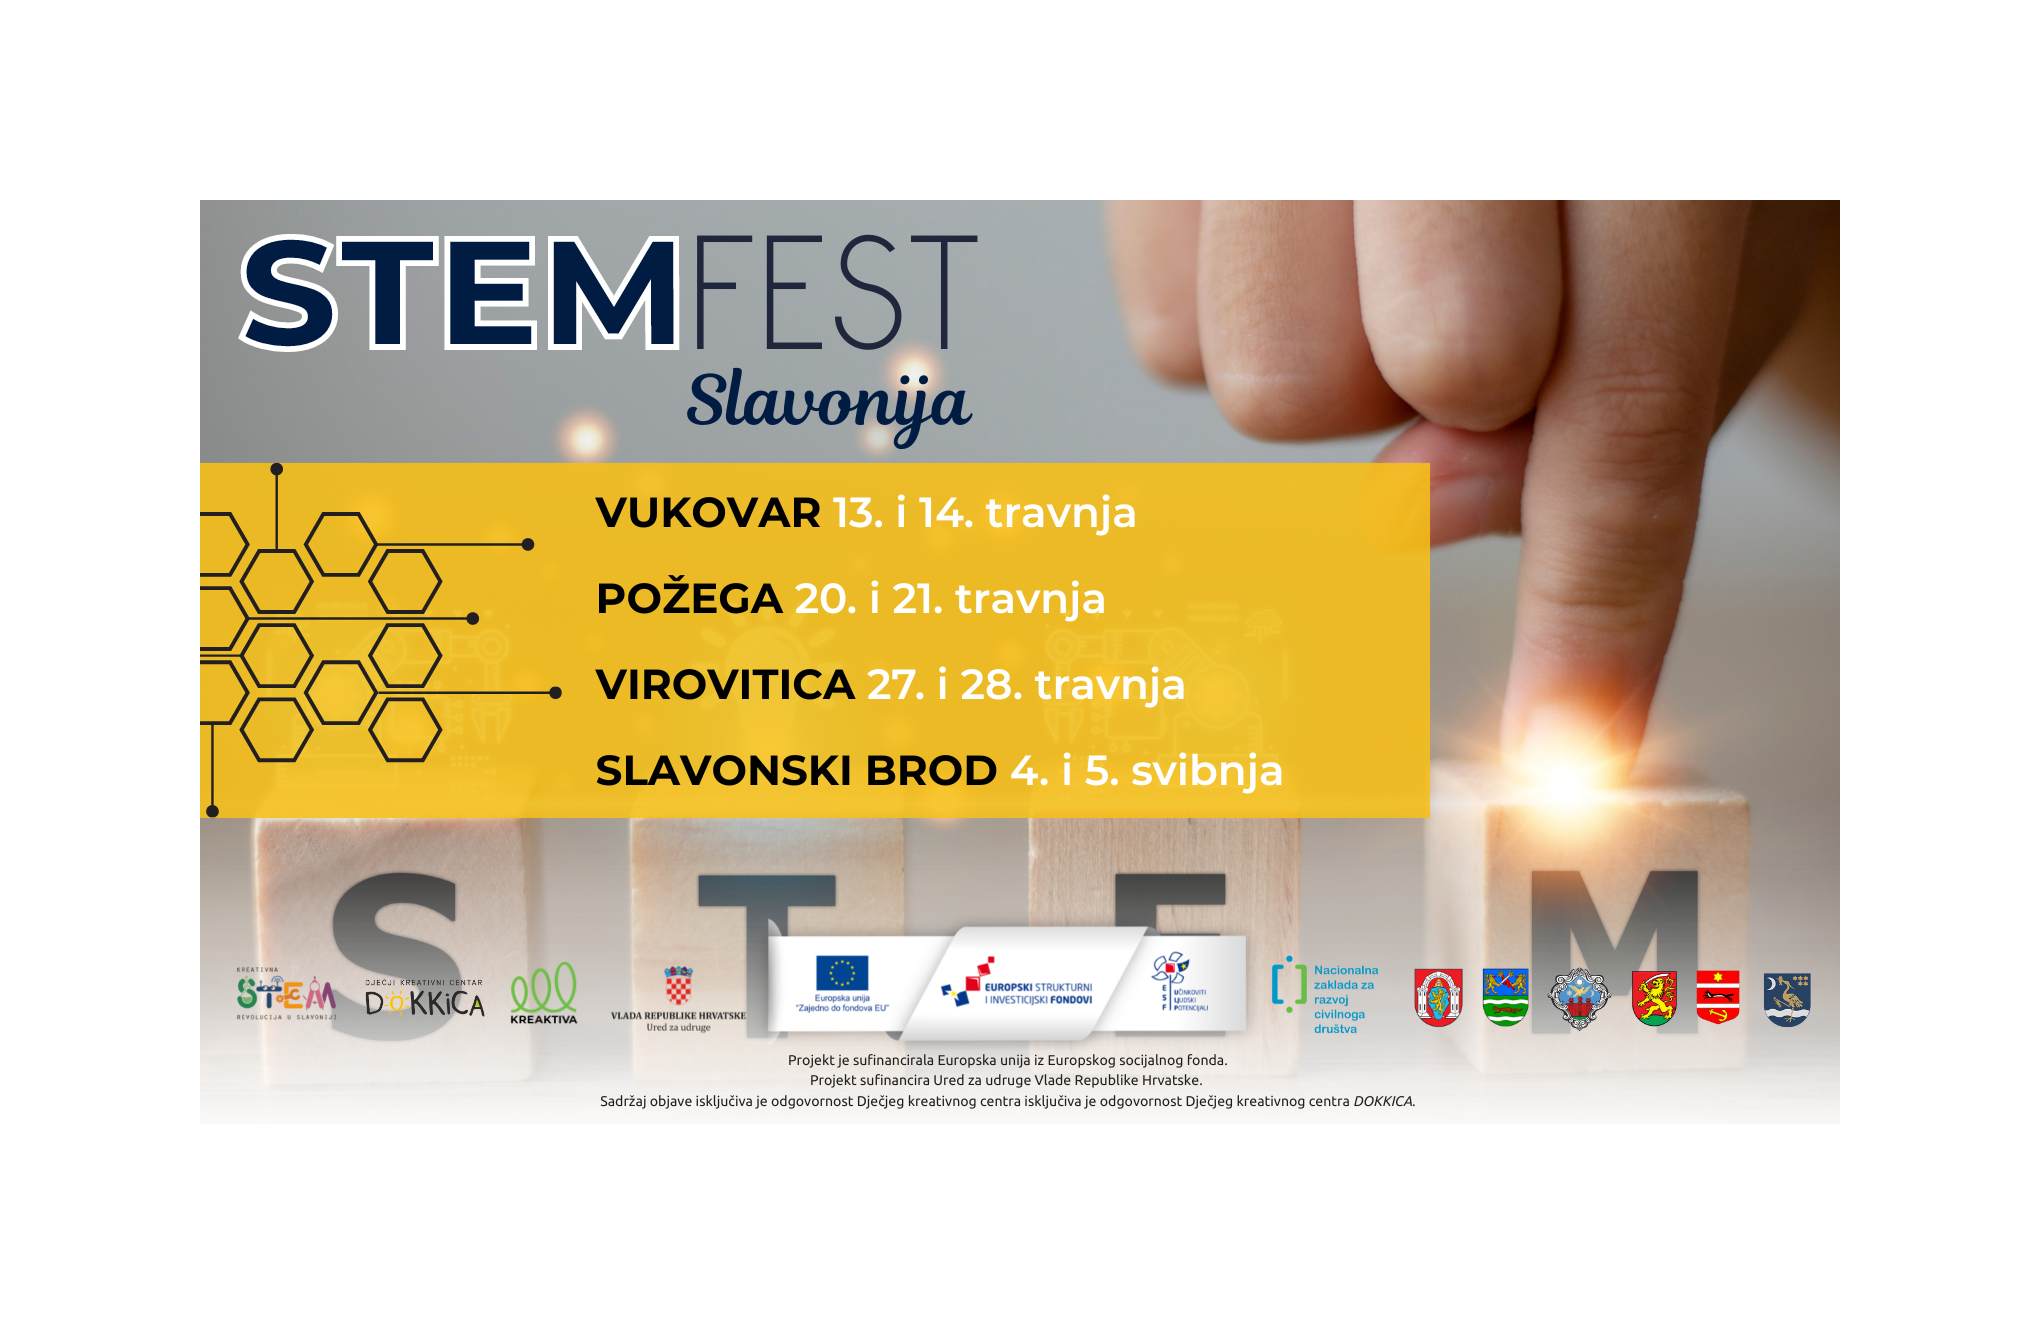 STEM FEST Slavonija